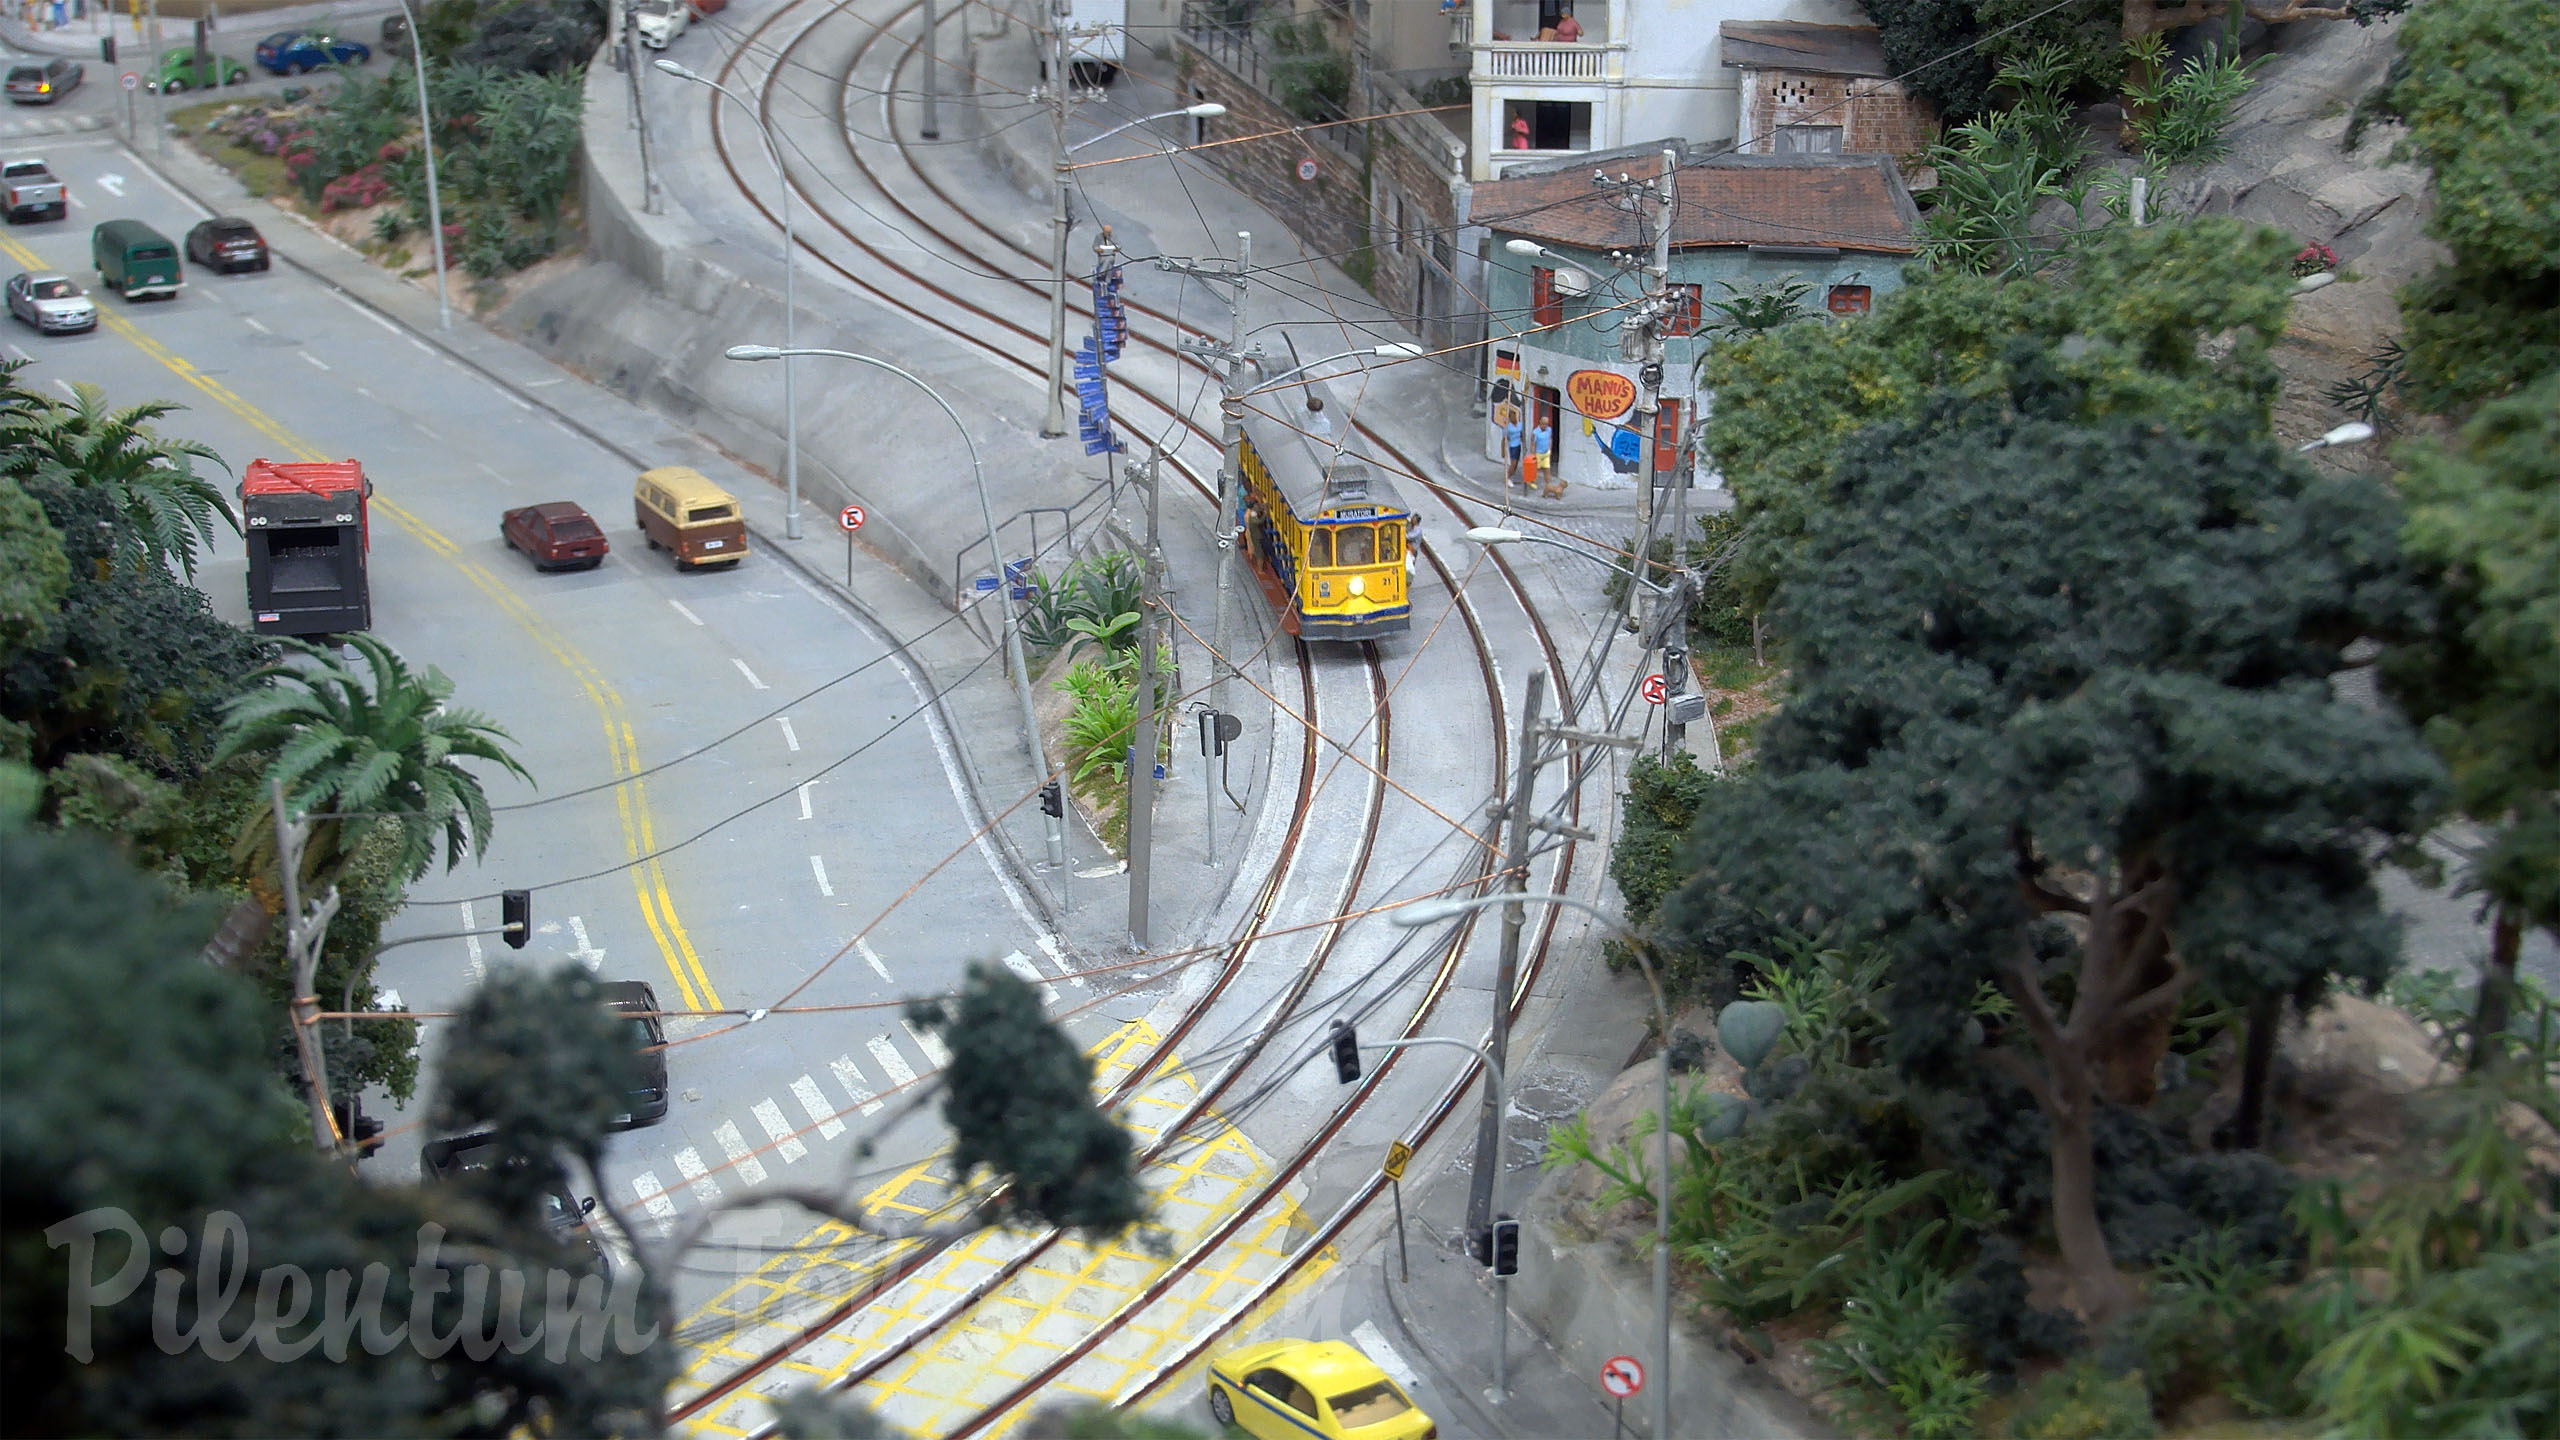 Verdens ældste sporveje - Modelsporvogn i Rio de Janeiro i Brasilien